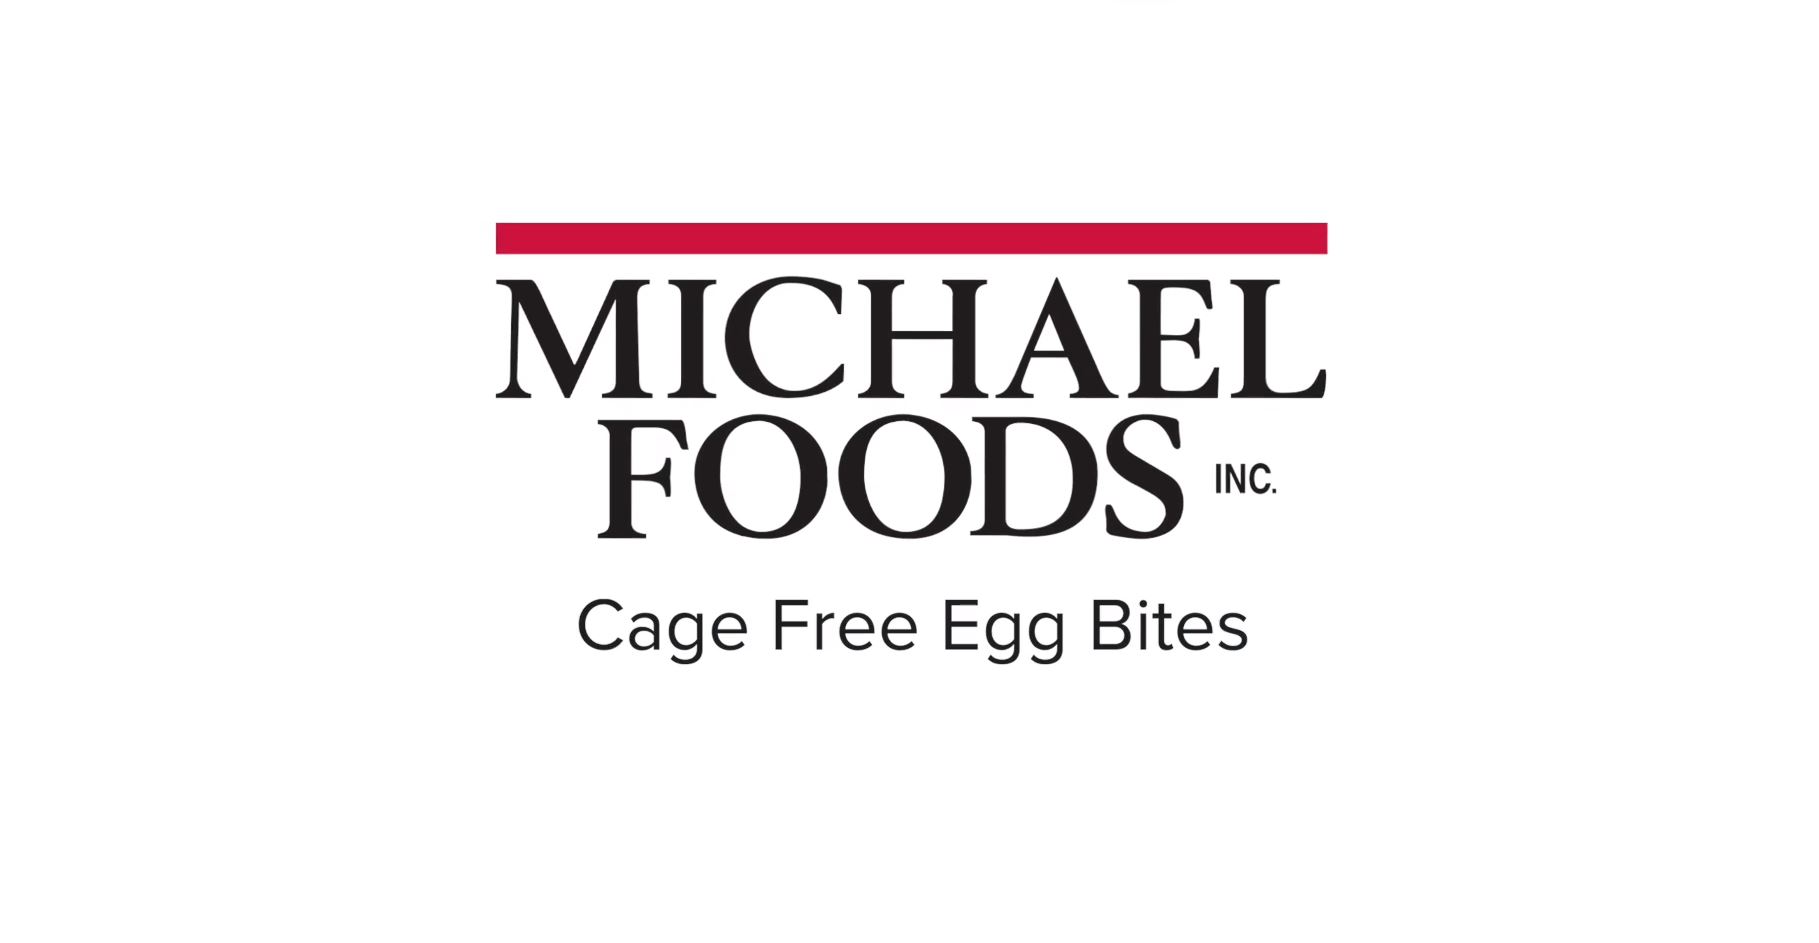 Cage Free Egg Bites